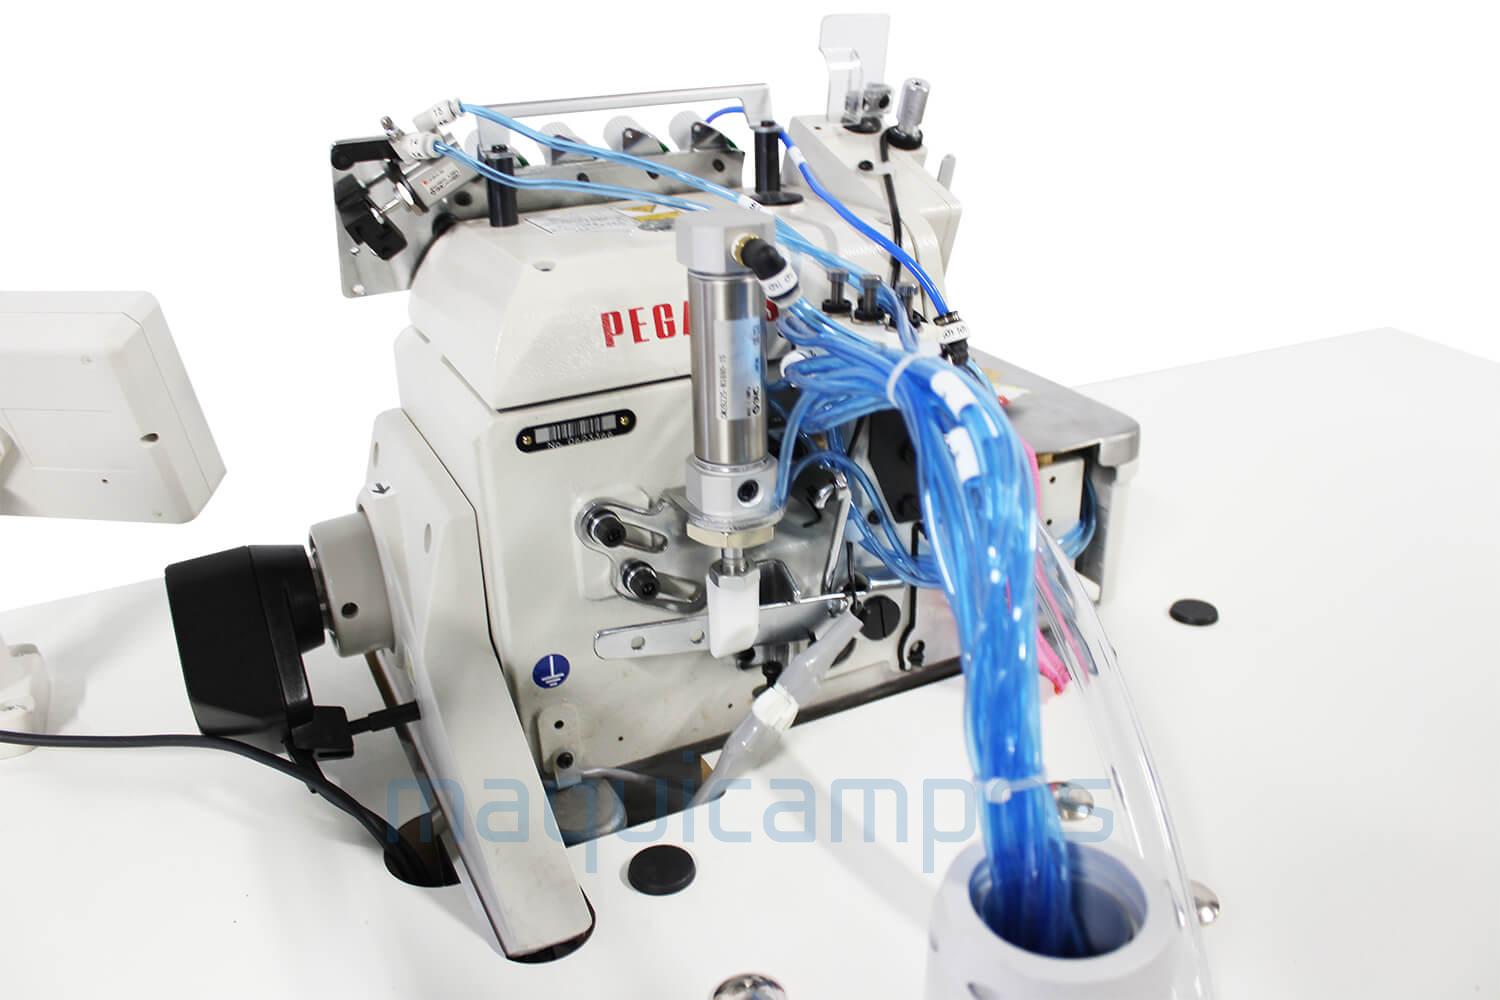 Pegasus EX5214-83BA [333K 2x4] Overlock Sewing Machine with System BL3B